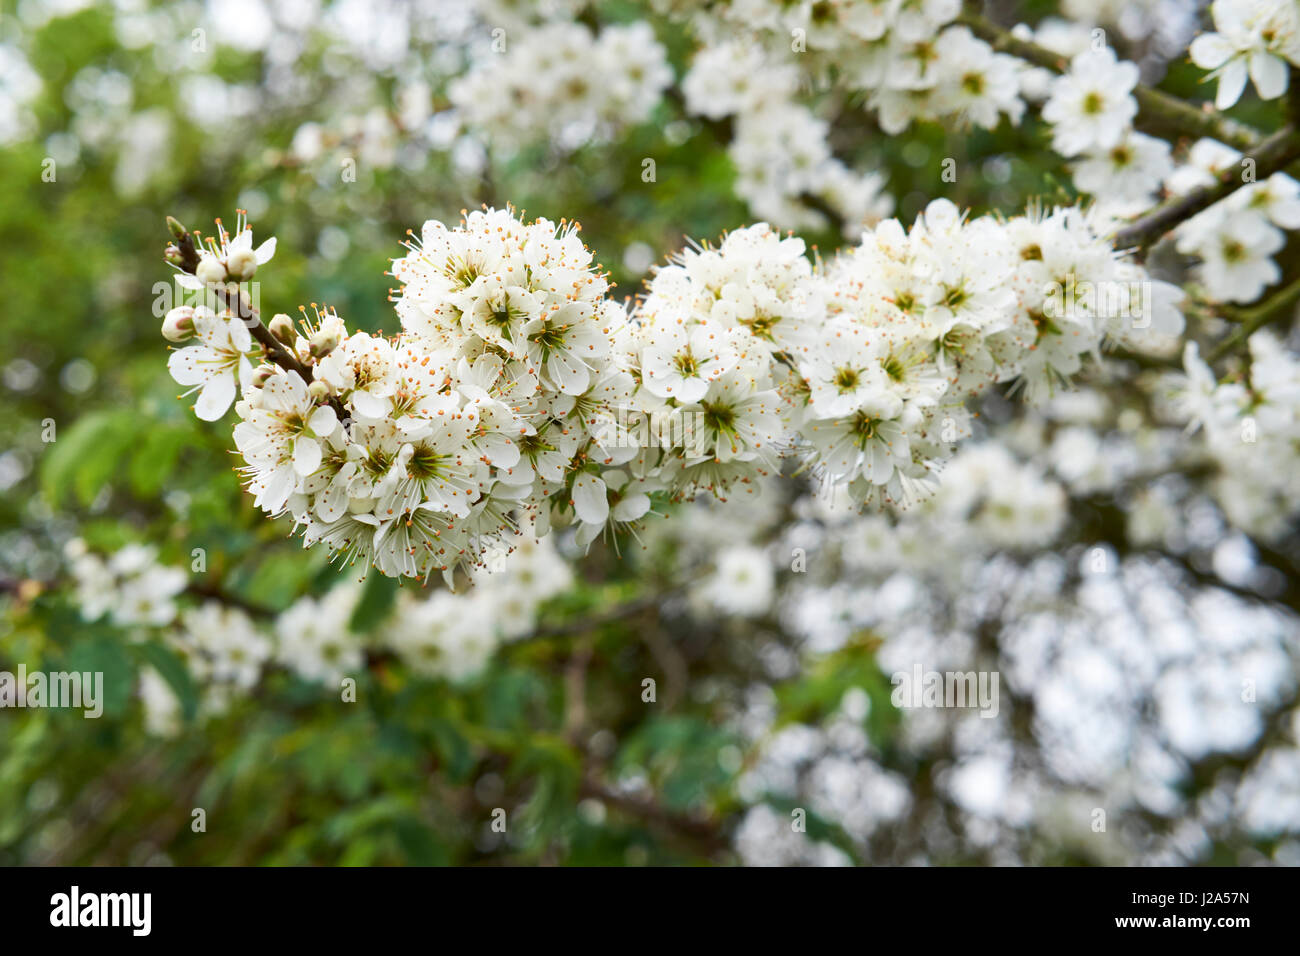 Blackthorn (Prunus spinosa) in full spring white blossom, Bedfordshire, UK. Stock Photo